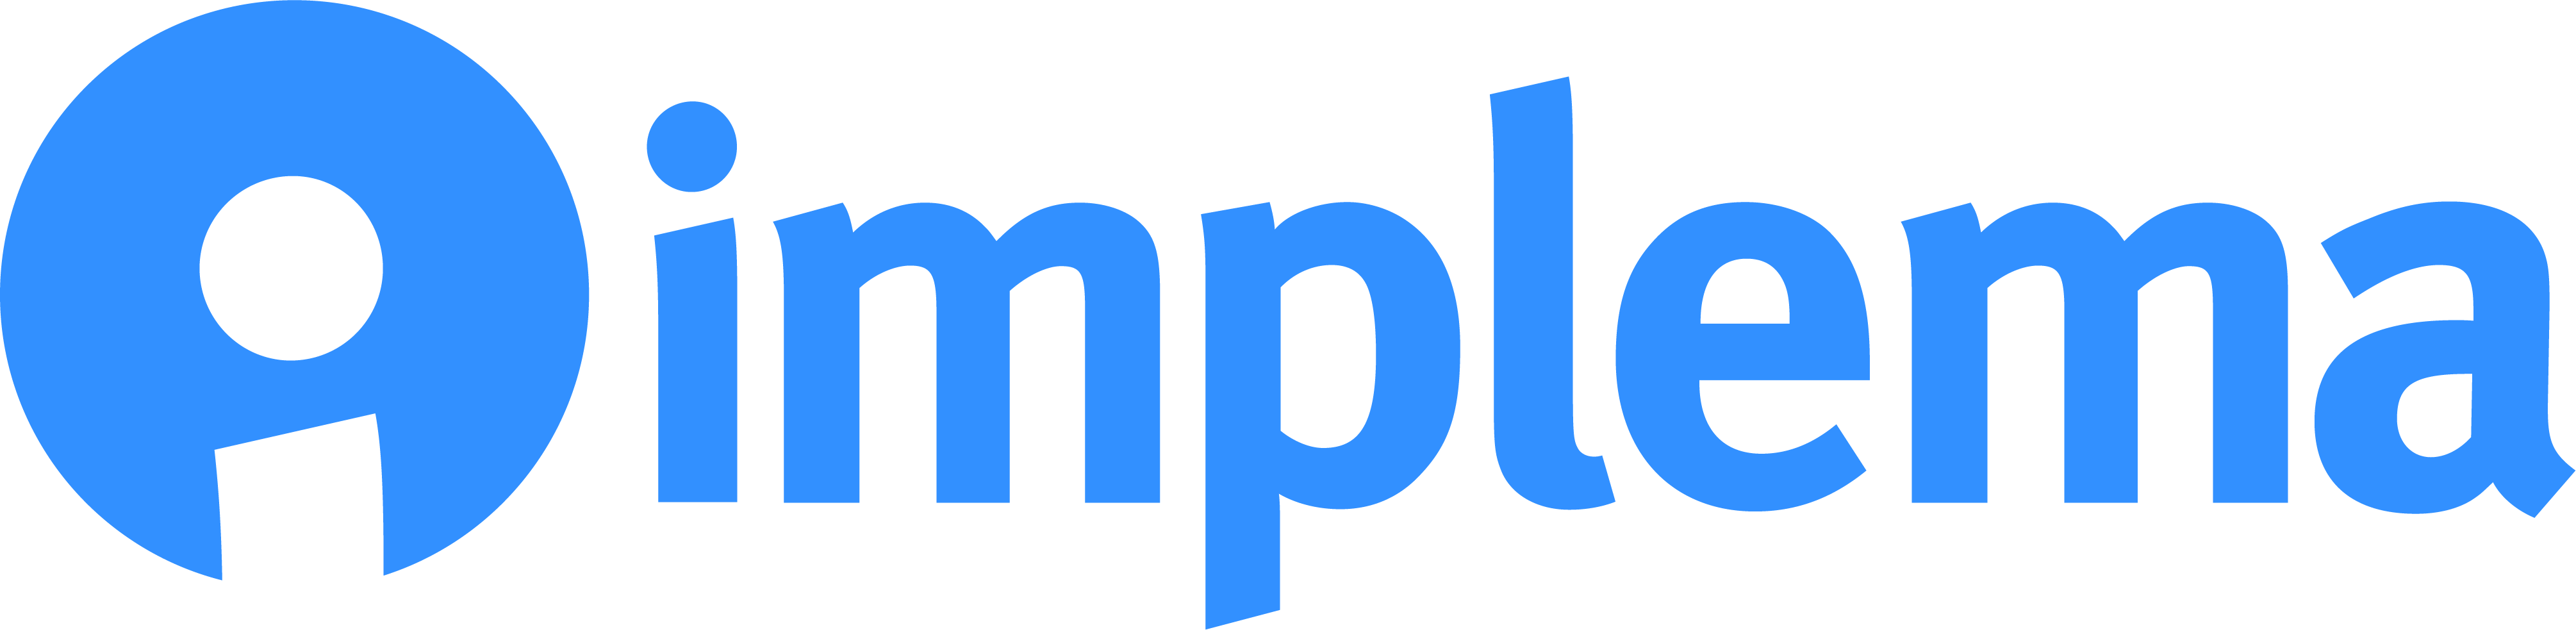 Implema logo